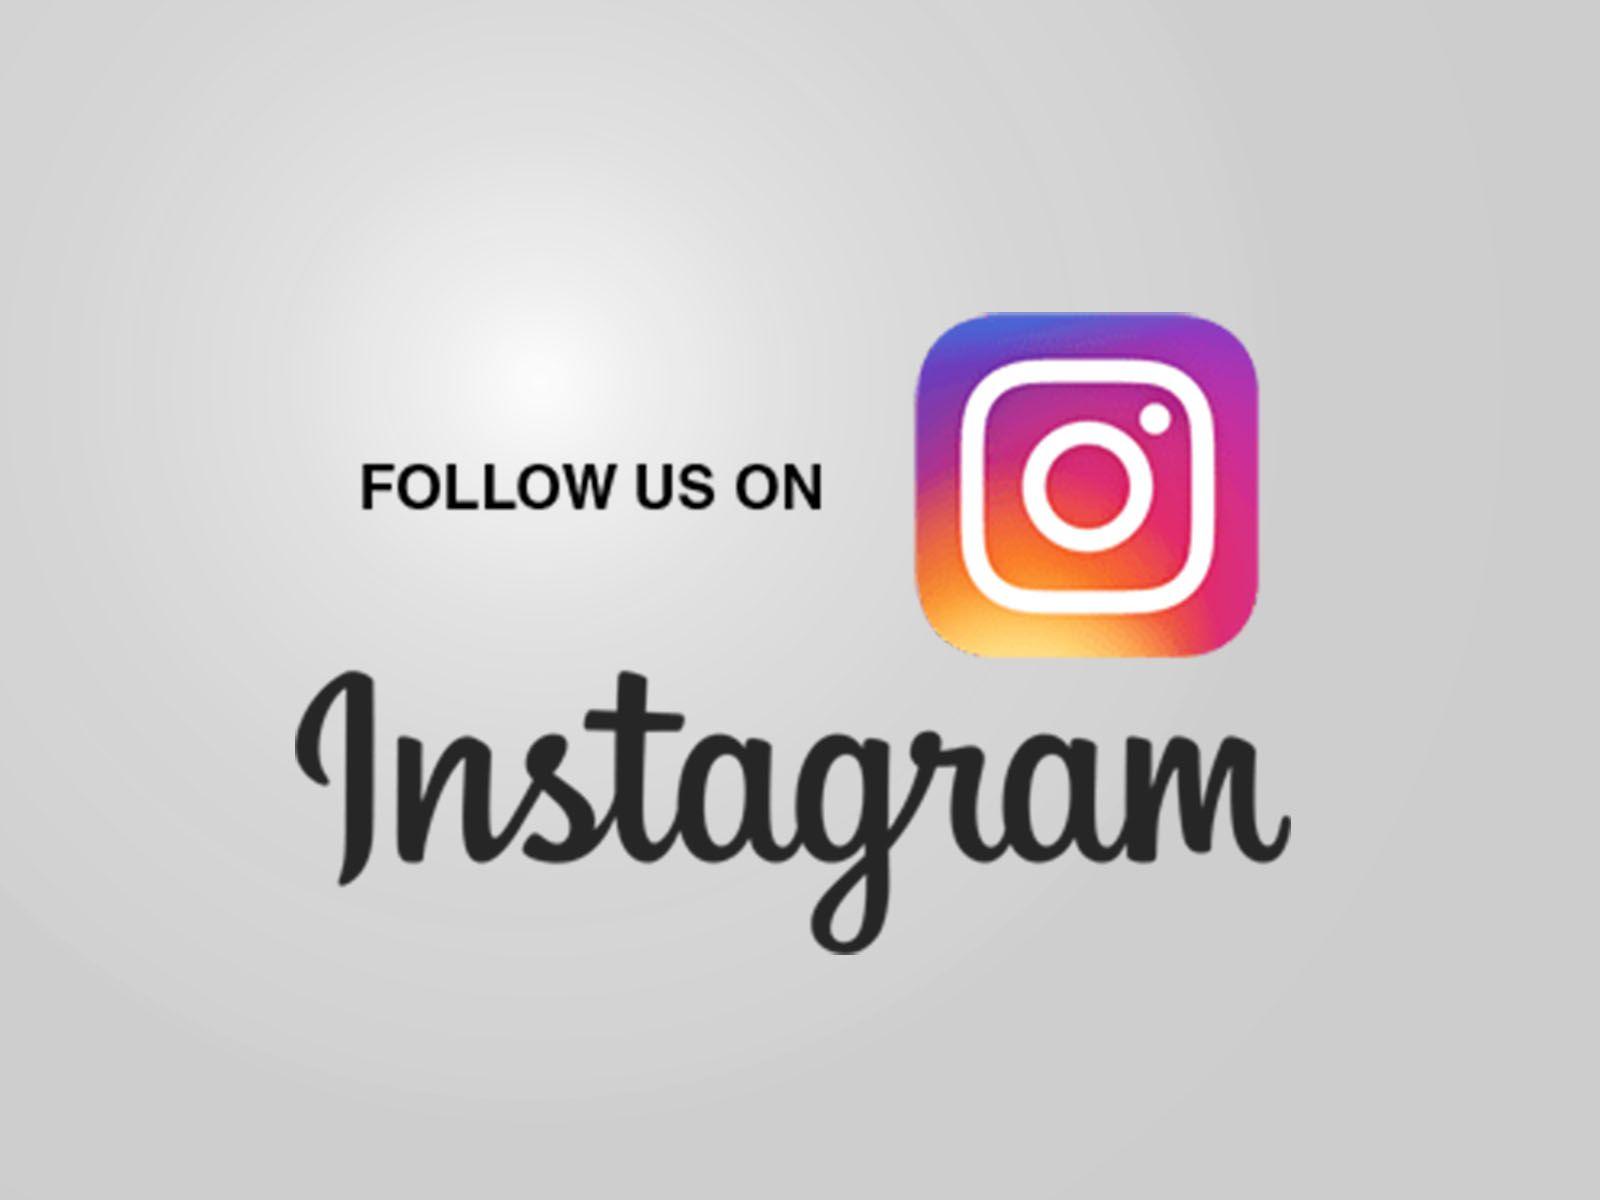 Follow Us On Instagram Logo - Follow Us On Instagram Backgrounds | Black, Grey, Technology ...